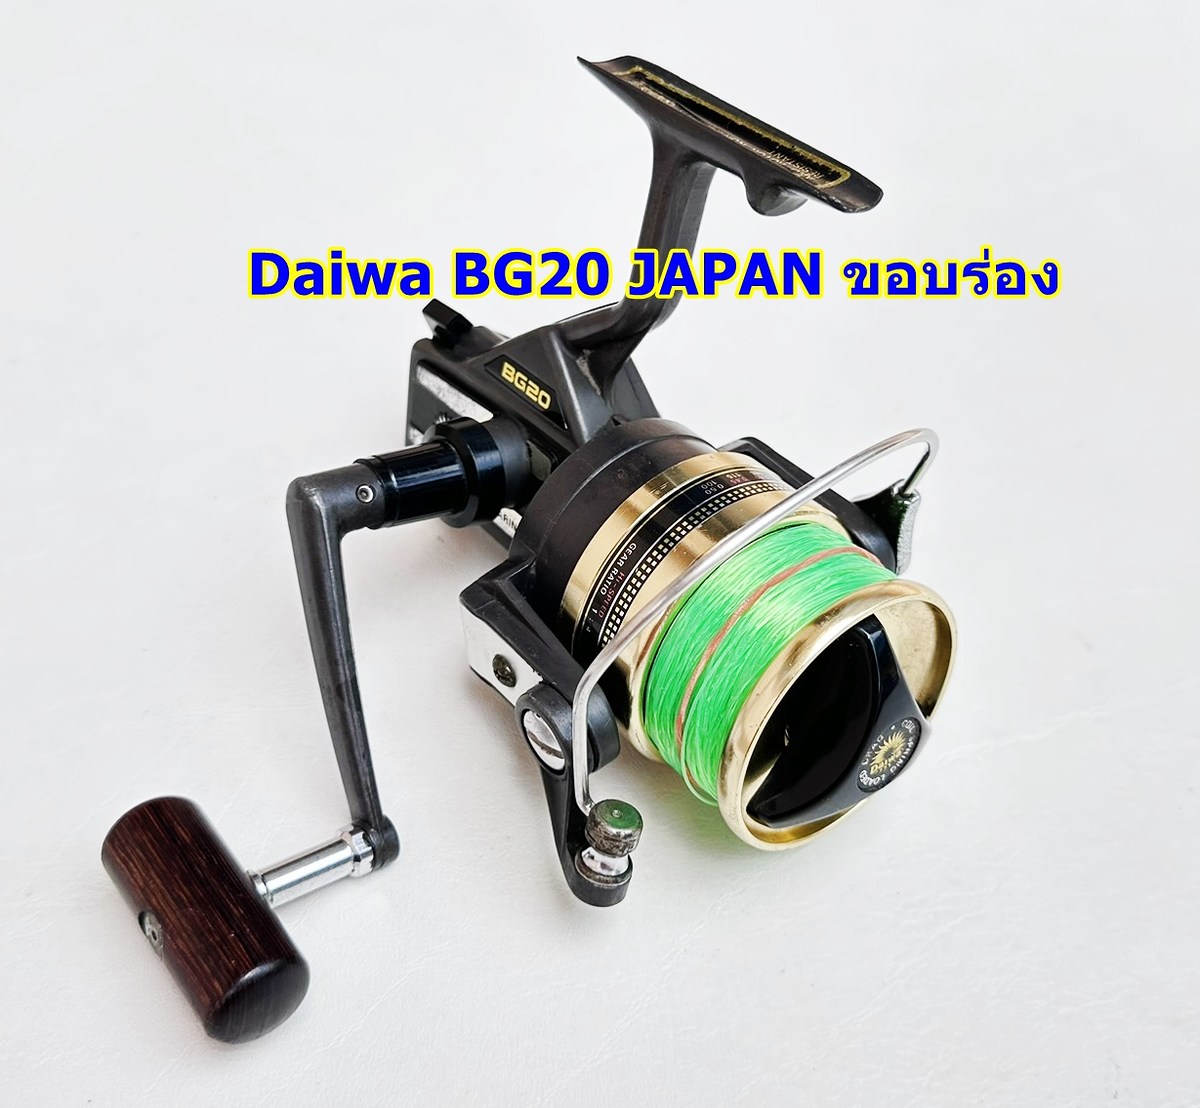 Daiwa BG20 Japan ขอบร่อง : ตลาดอุปกรณ์ตกปลา Fishing Gear Market